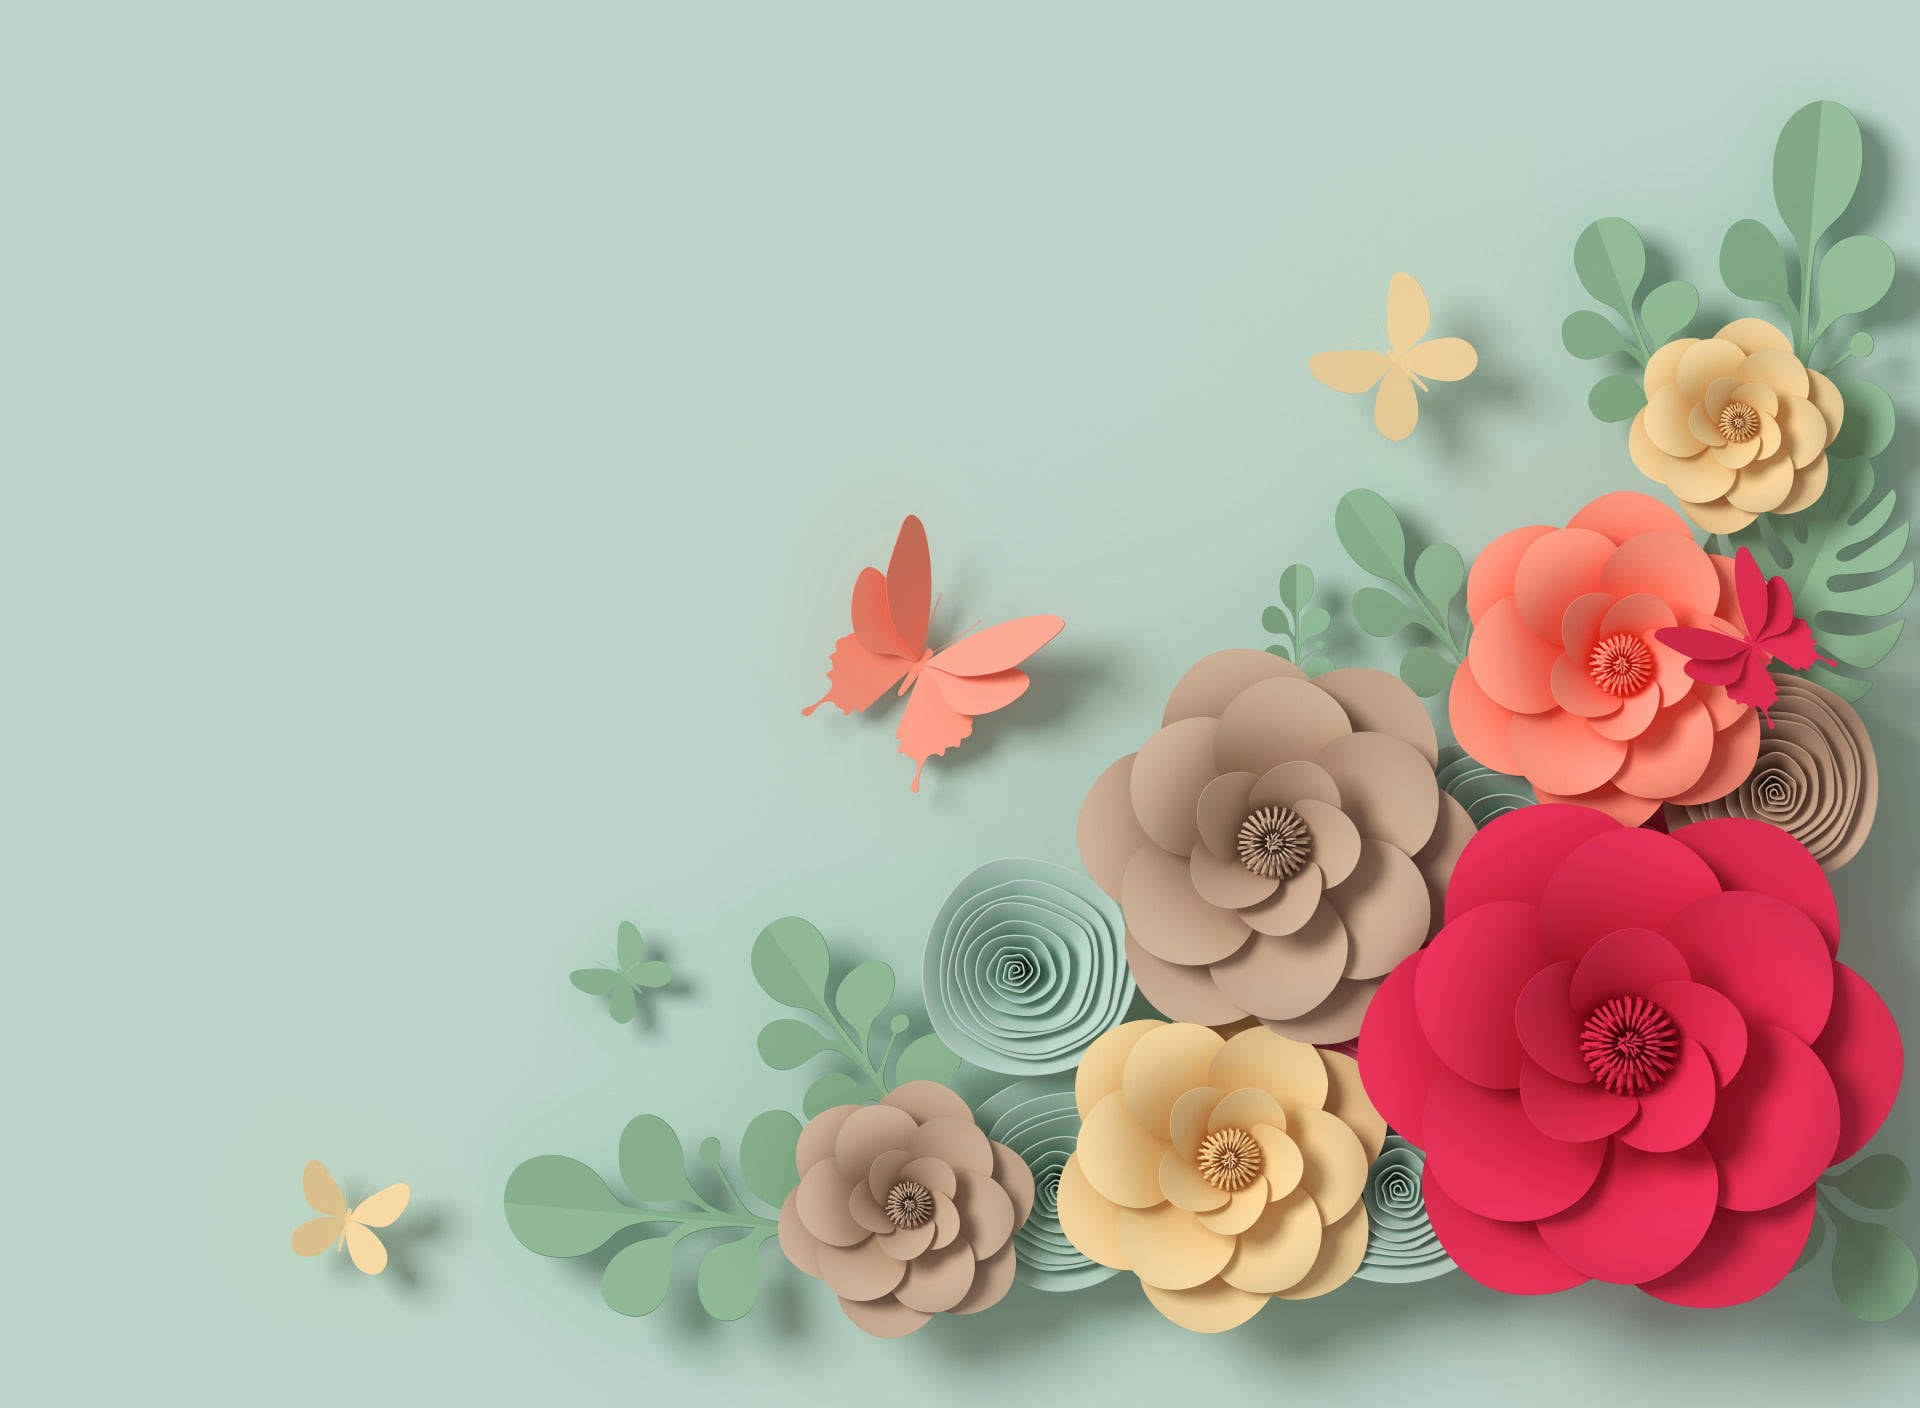 Pastel Desktop With Paper Flowers And Butterflies Wallpaper